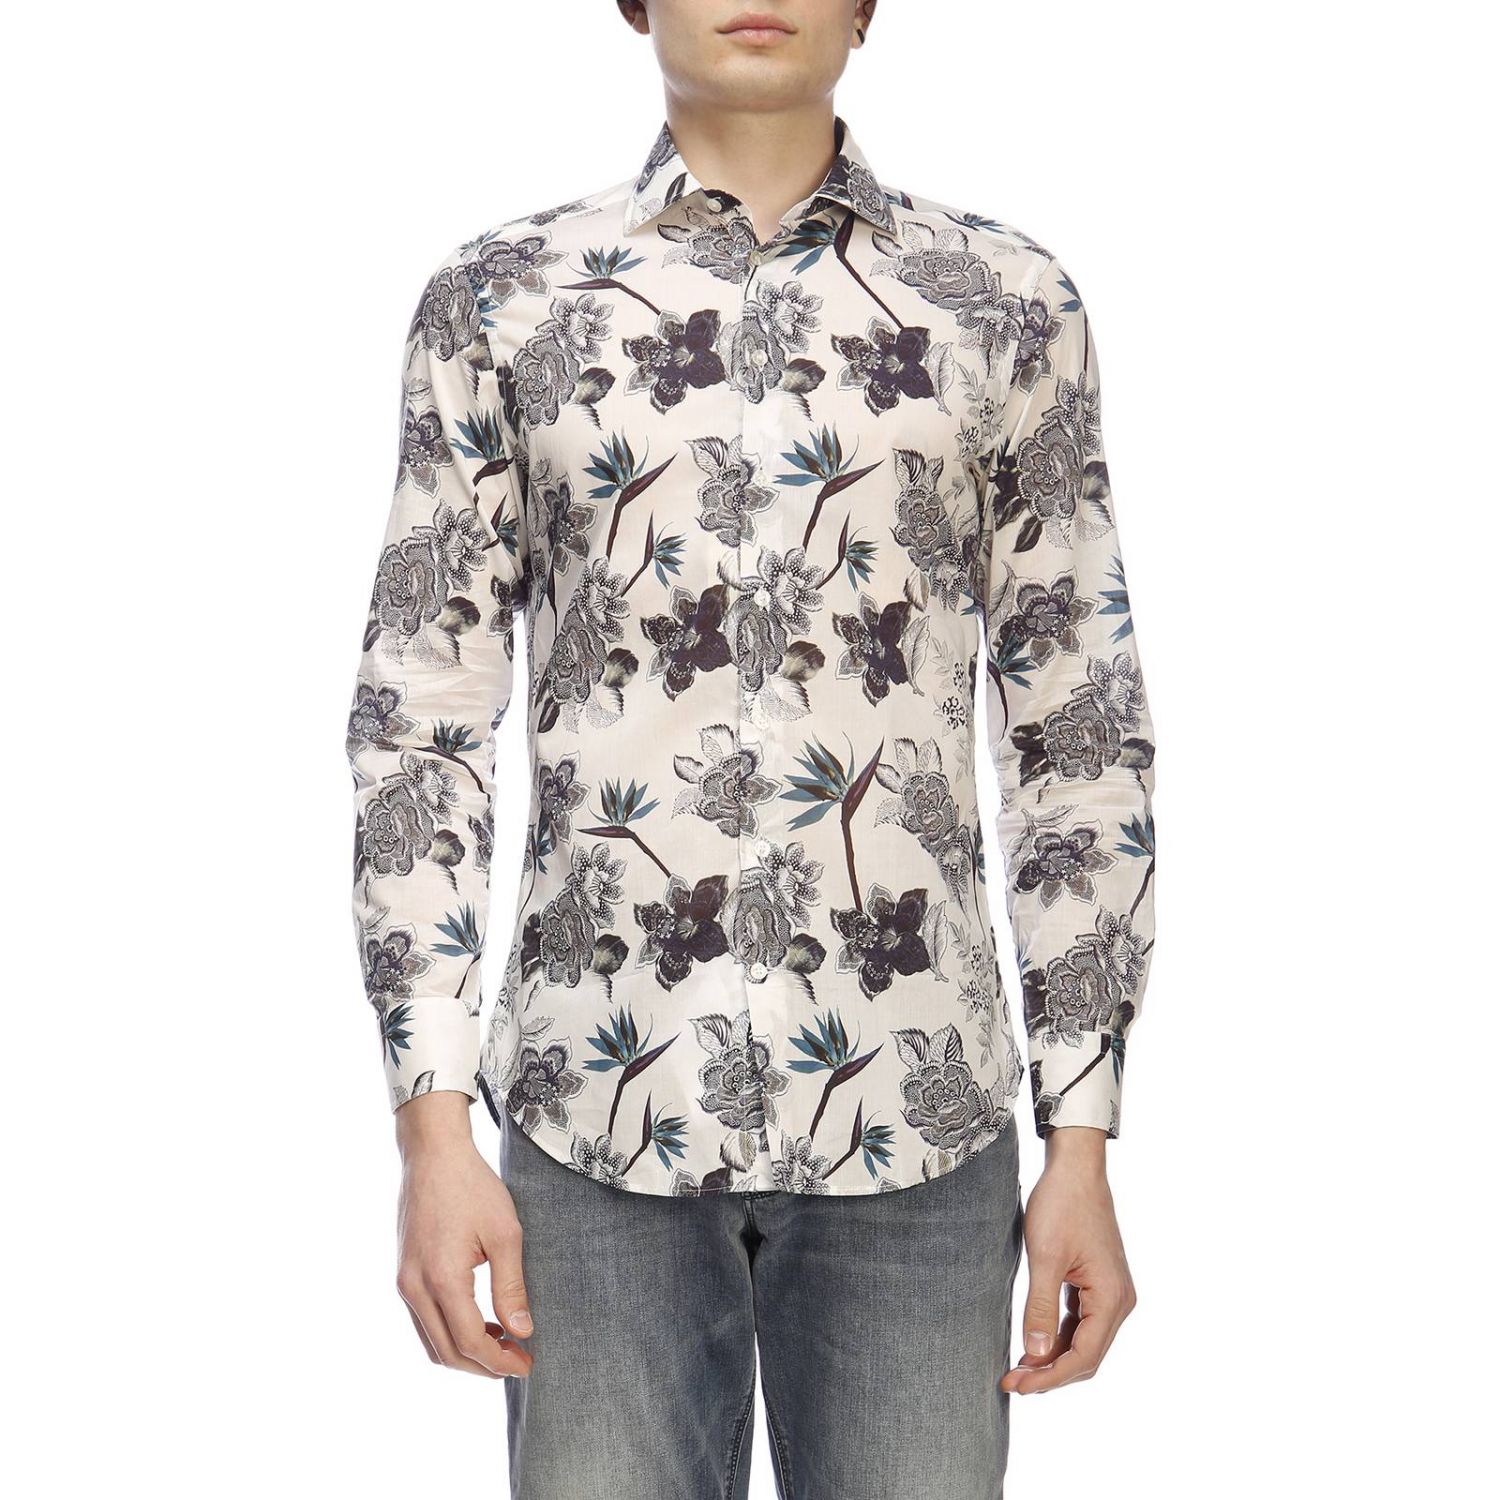 Etro Outlet: shirt for man - White | Etro shirt 11451 4762 online on ...